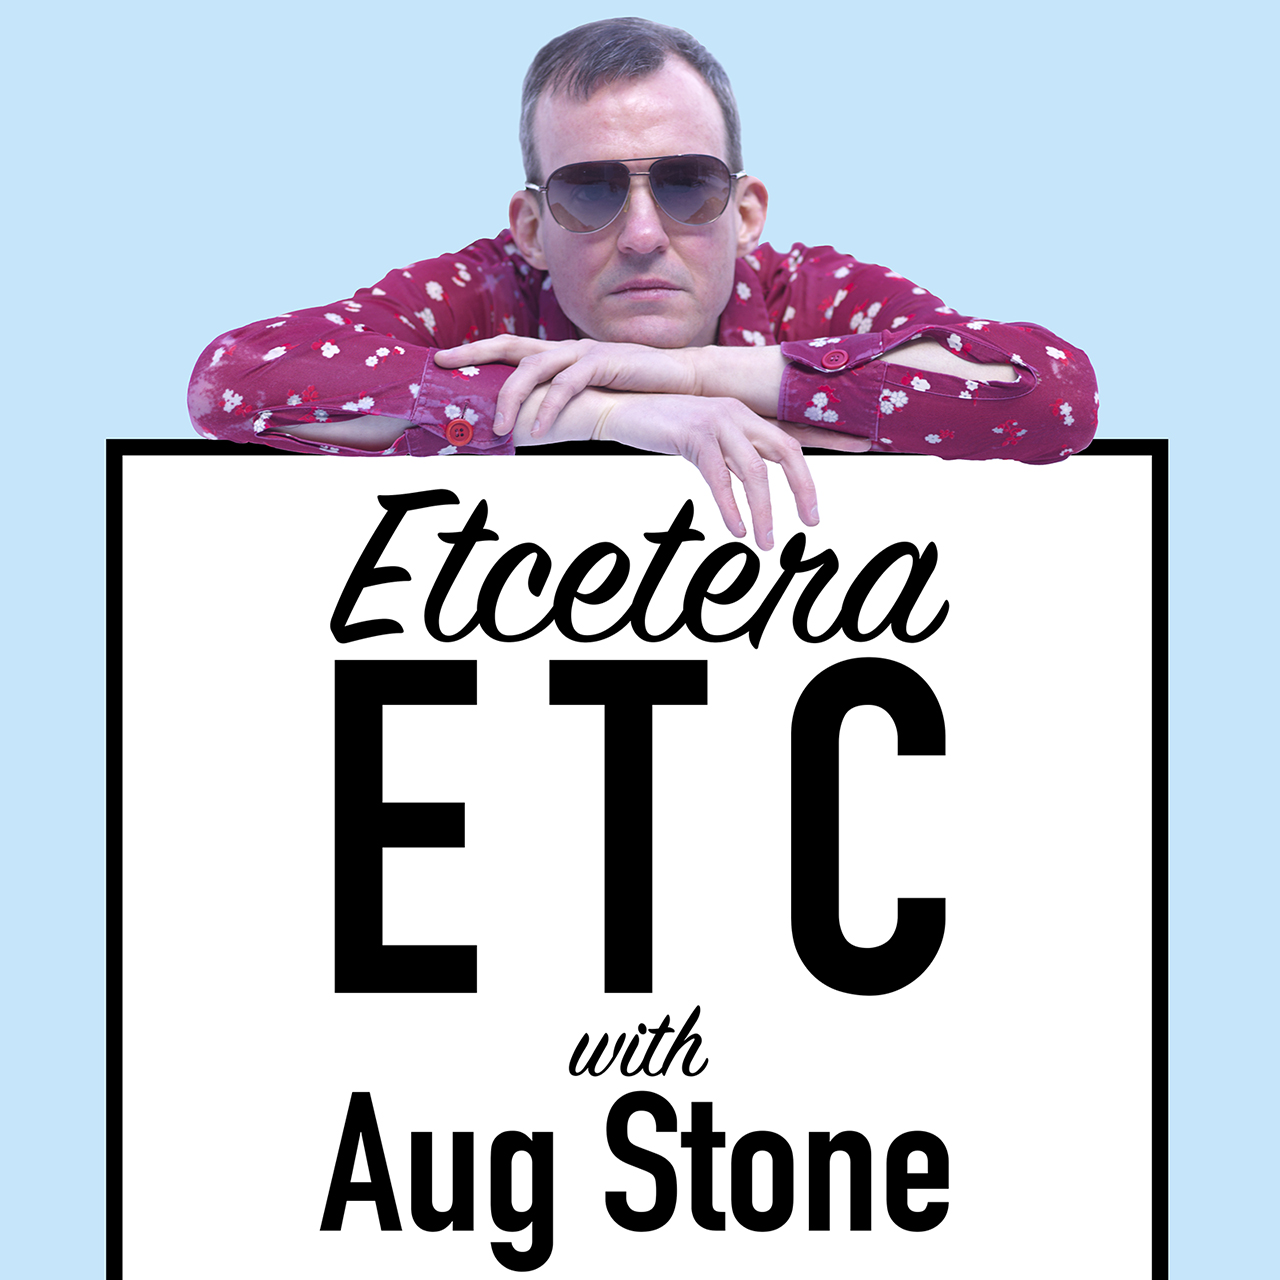 Etcetera ETC with Aug Stone